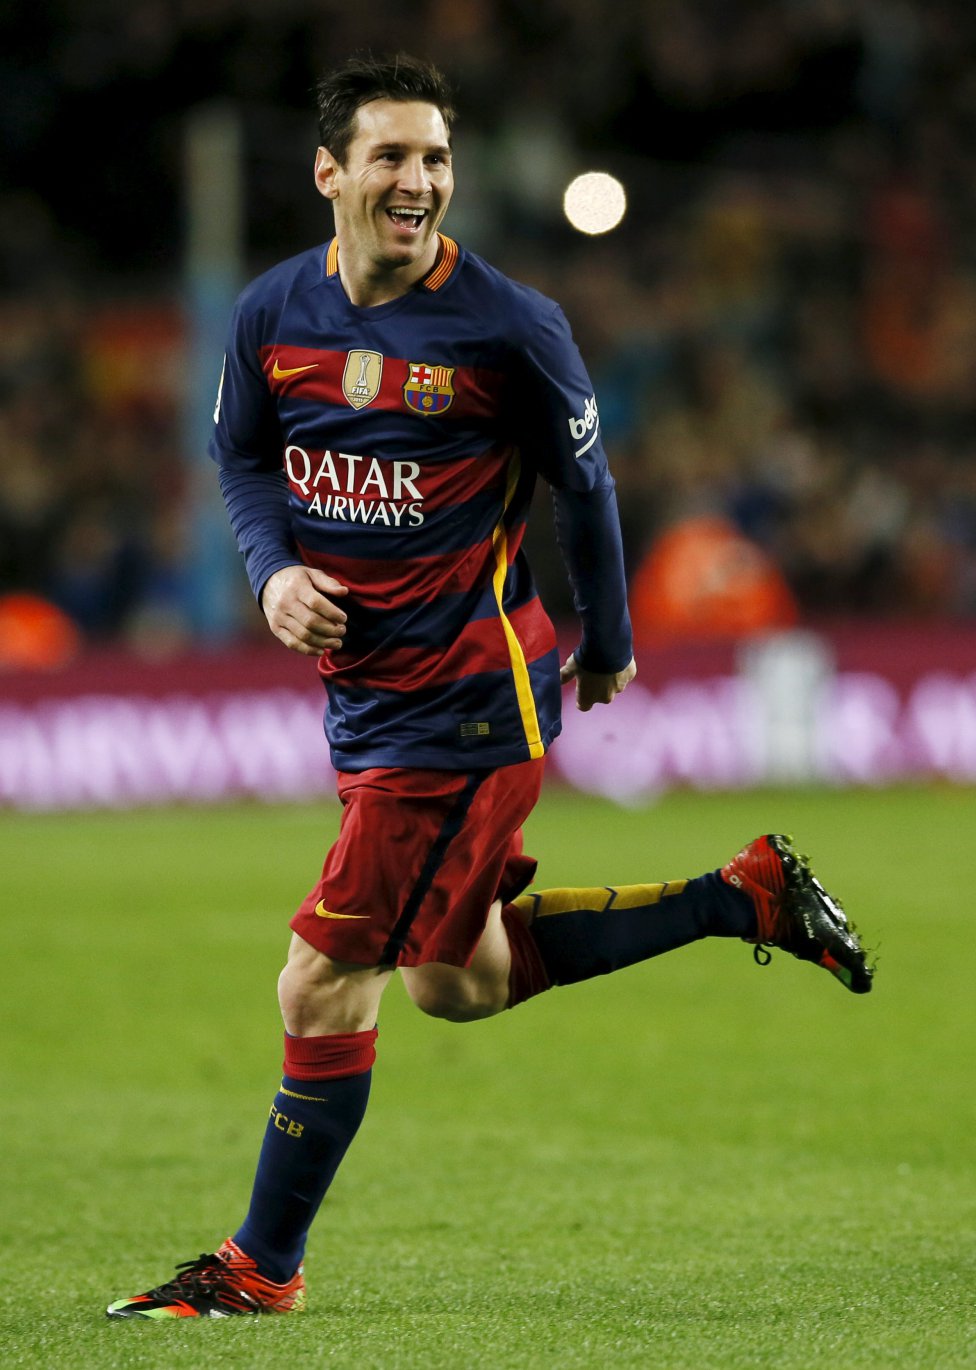 4. Leo Messi